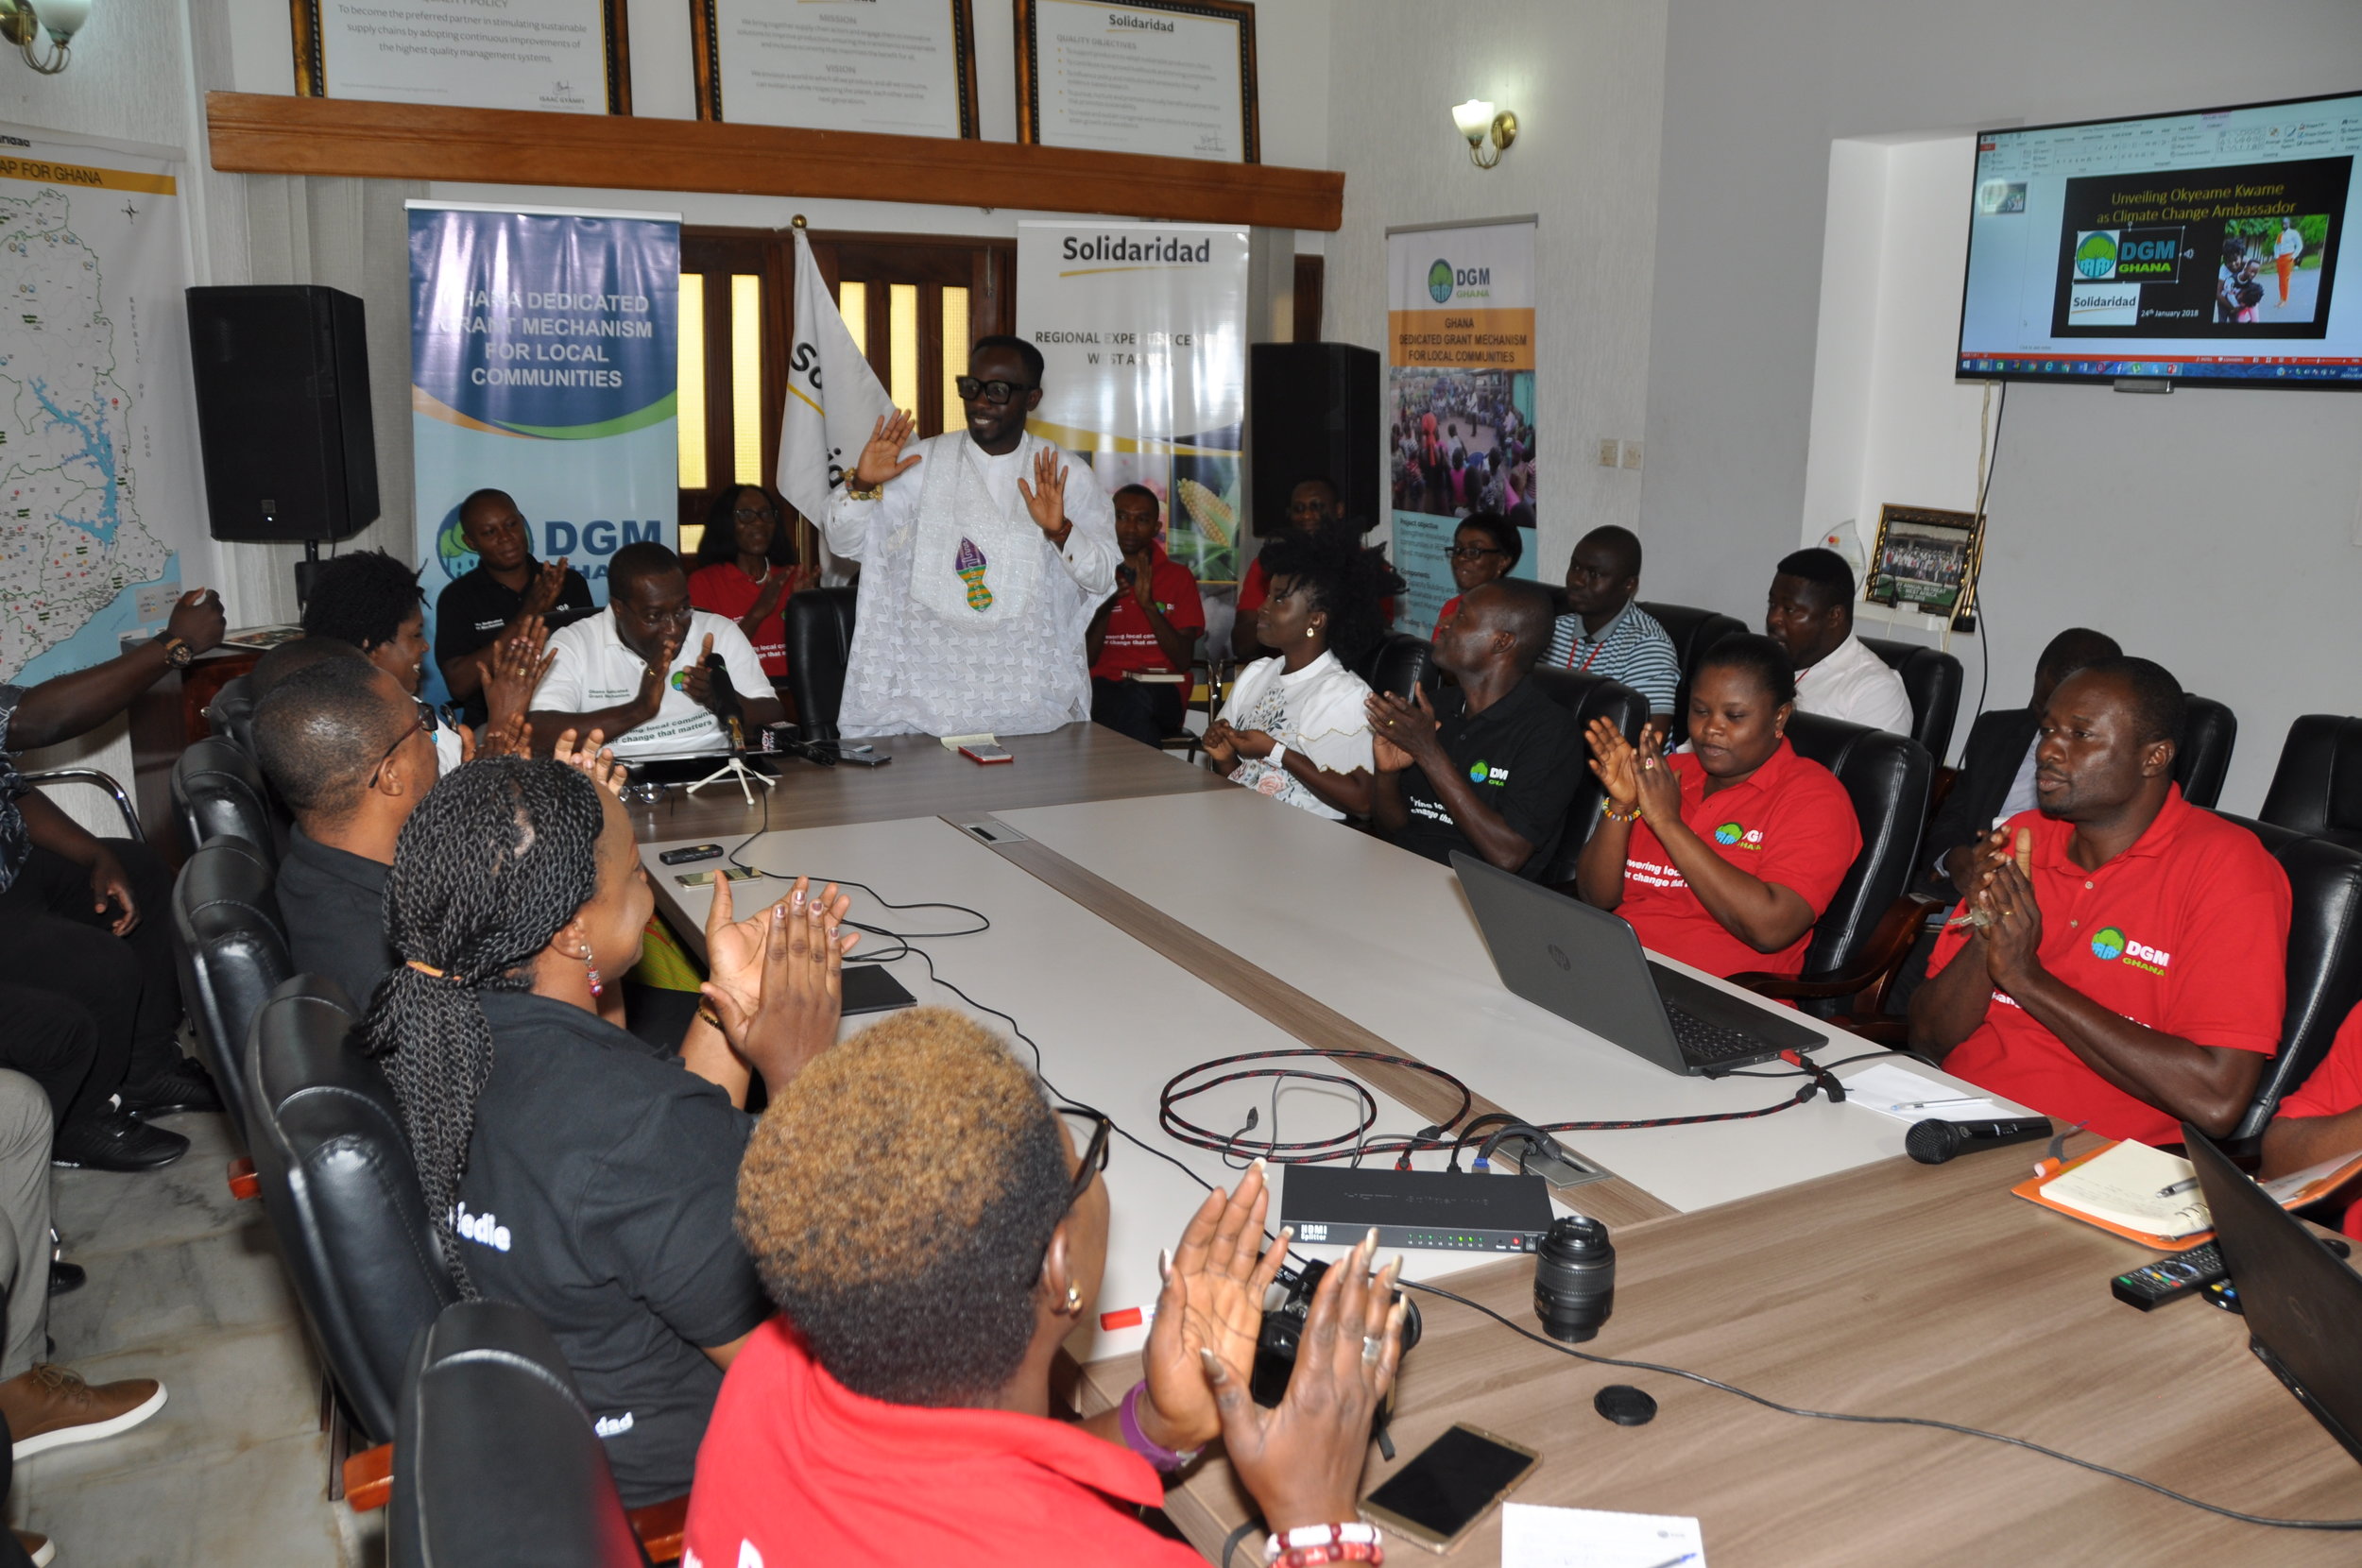  Okyeame Kwame addressing the staff of Solidaridad West Africa; Credit: Bossman Owusu, DGM Ghana 